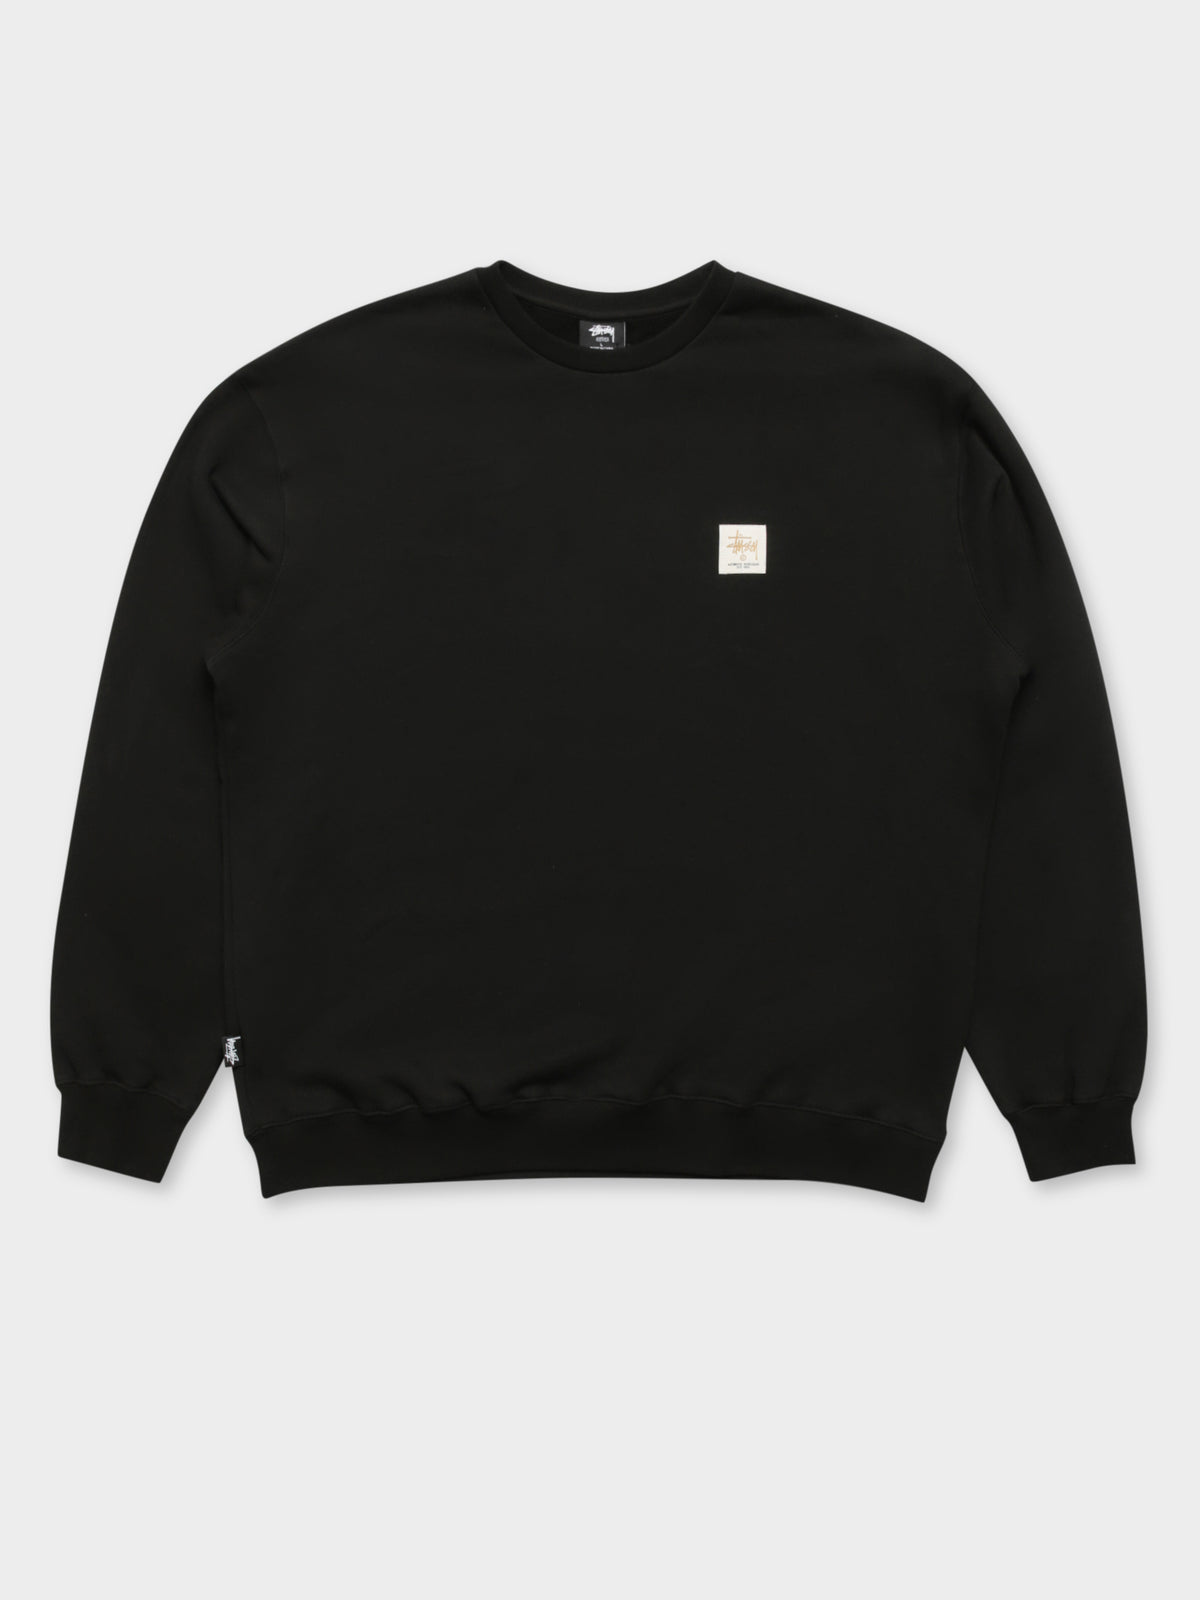 Authentic Workwear Crew Sweater in Black